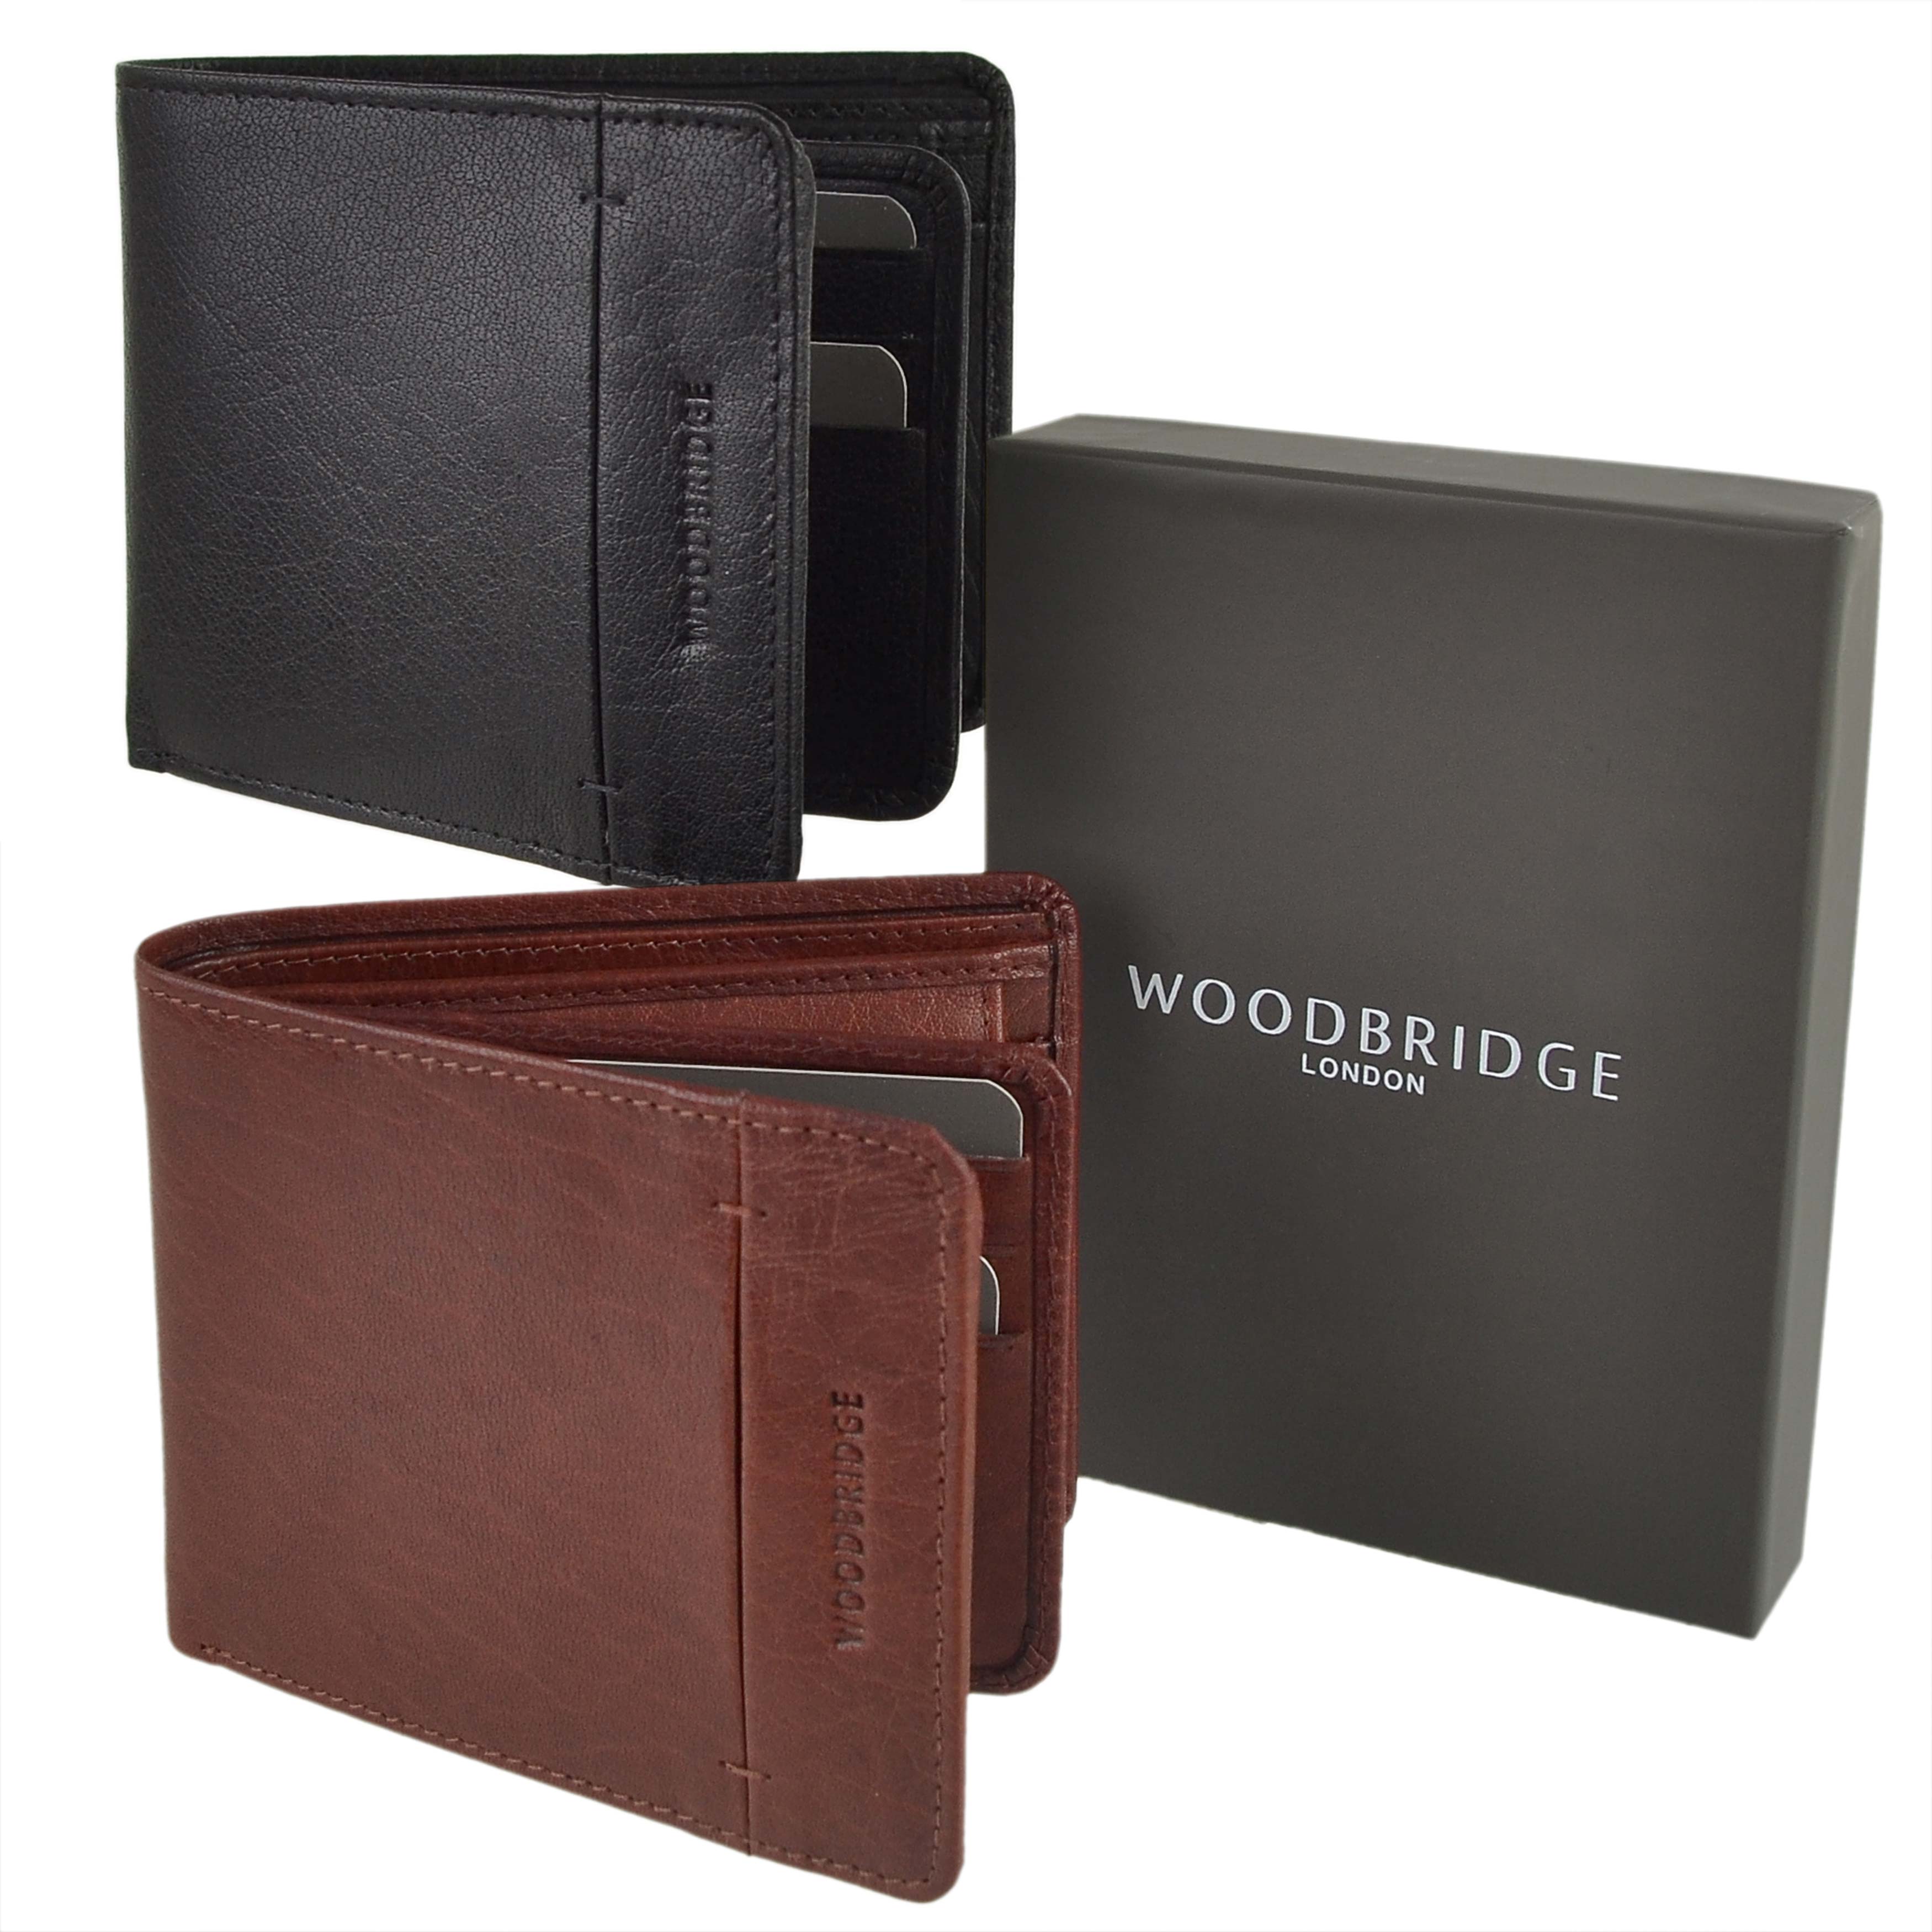 Woodbridge London Men's Premium Quality Designer Real Leather Wallet BOXED #4002 